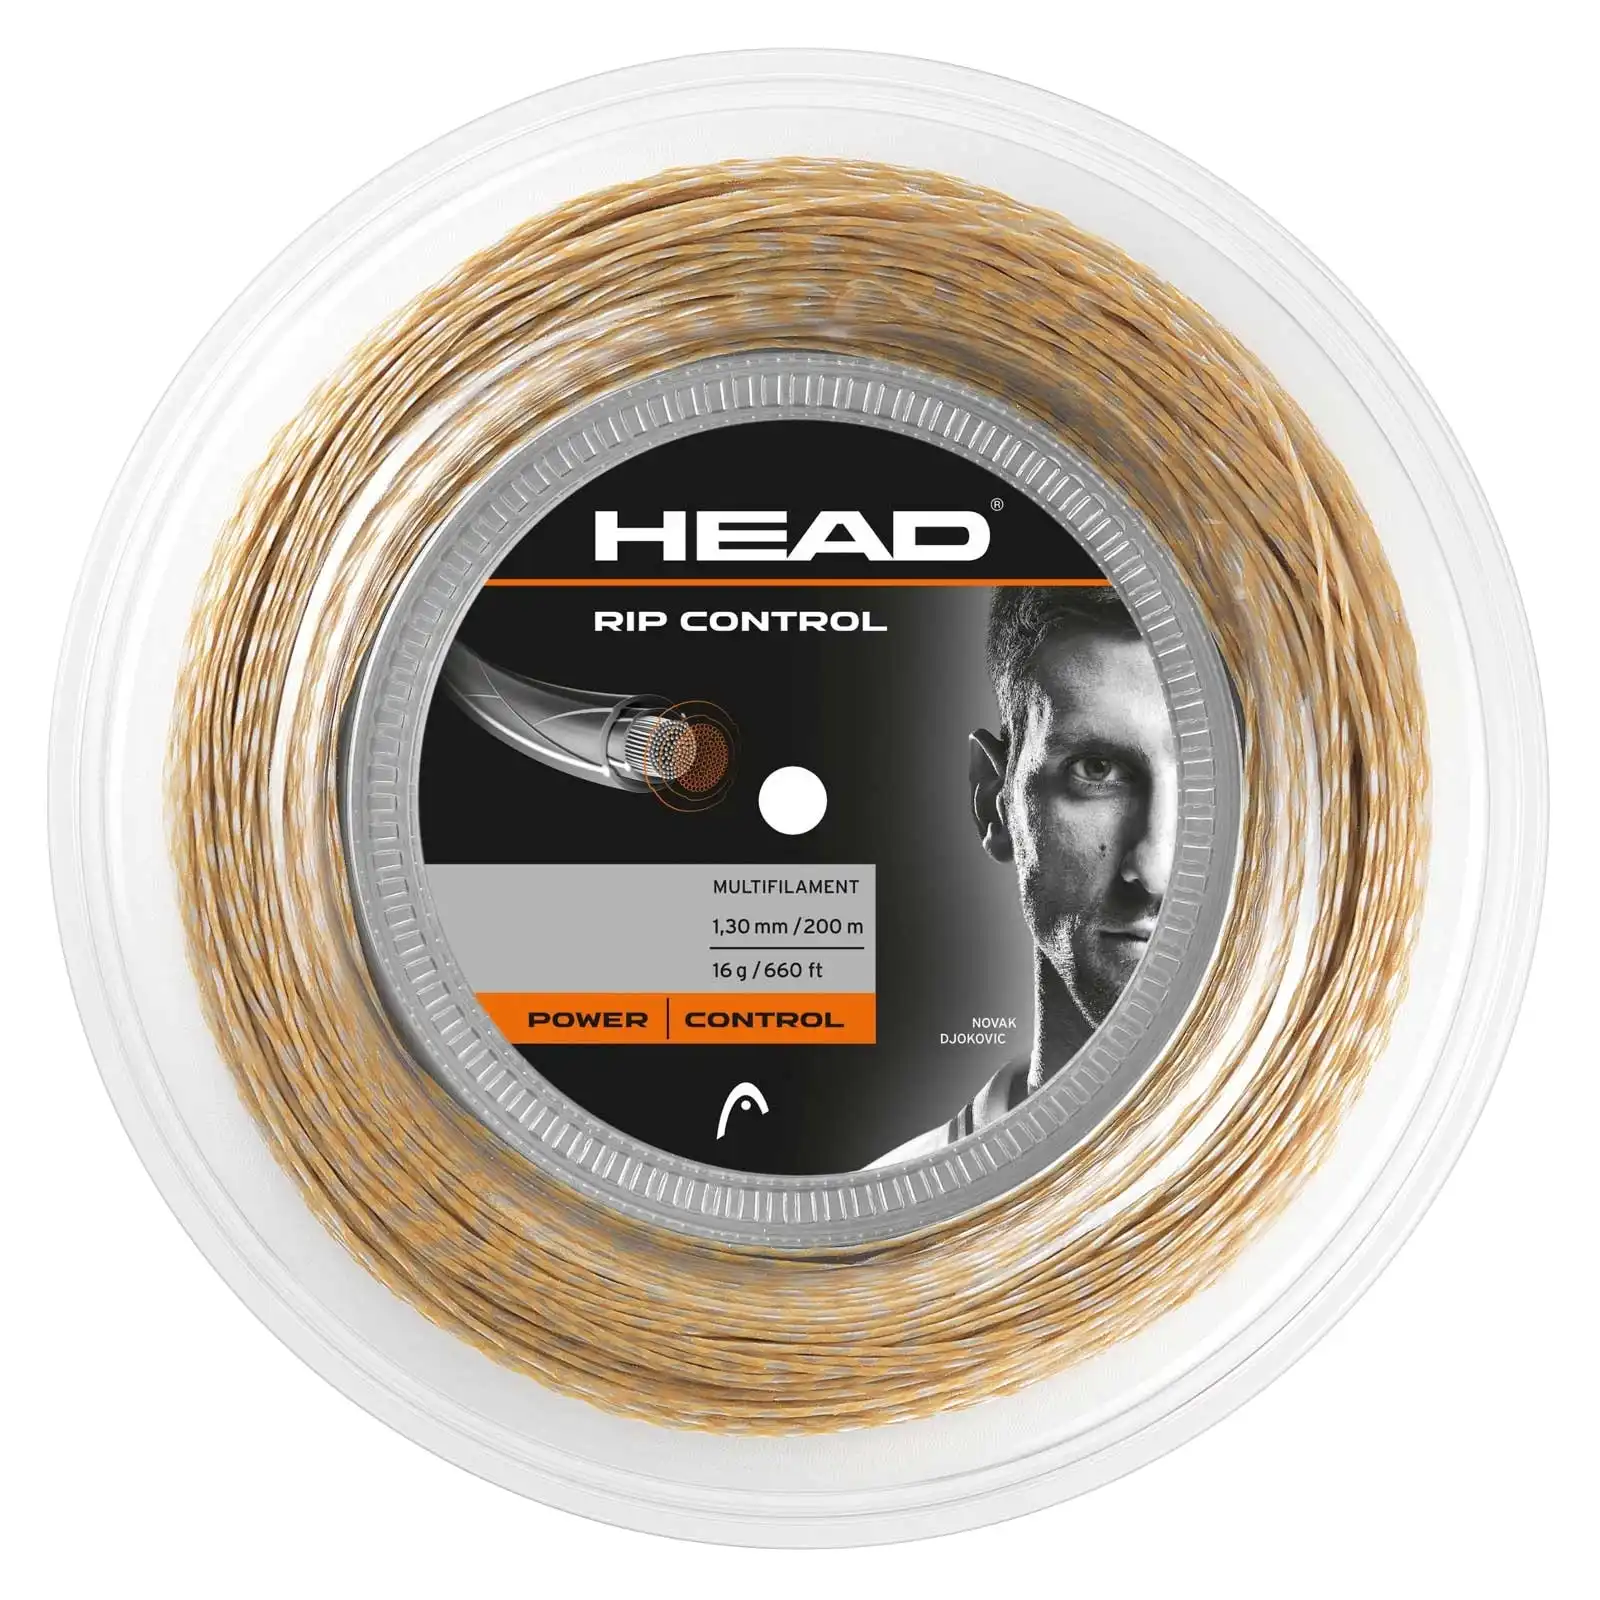 Head Rip Control 16g Tennis String Reel 200m 1.30mm Power Control